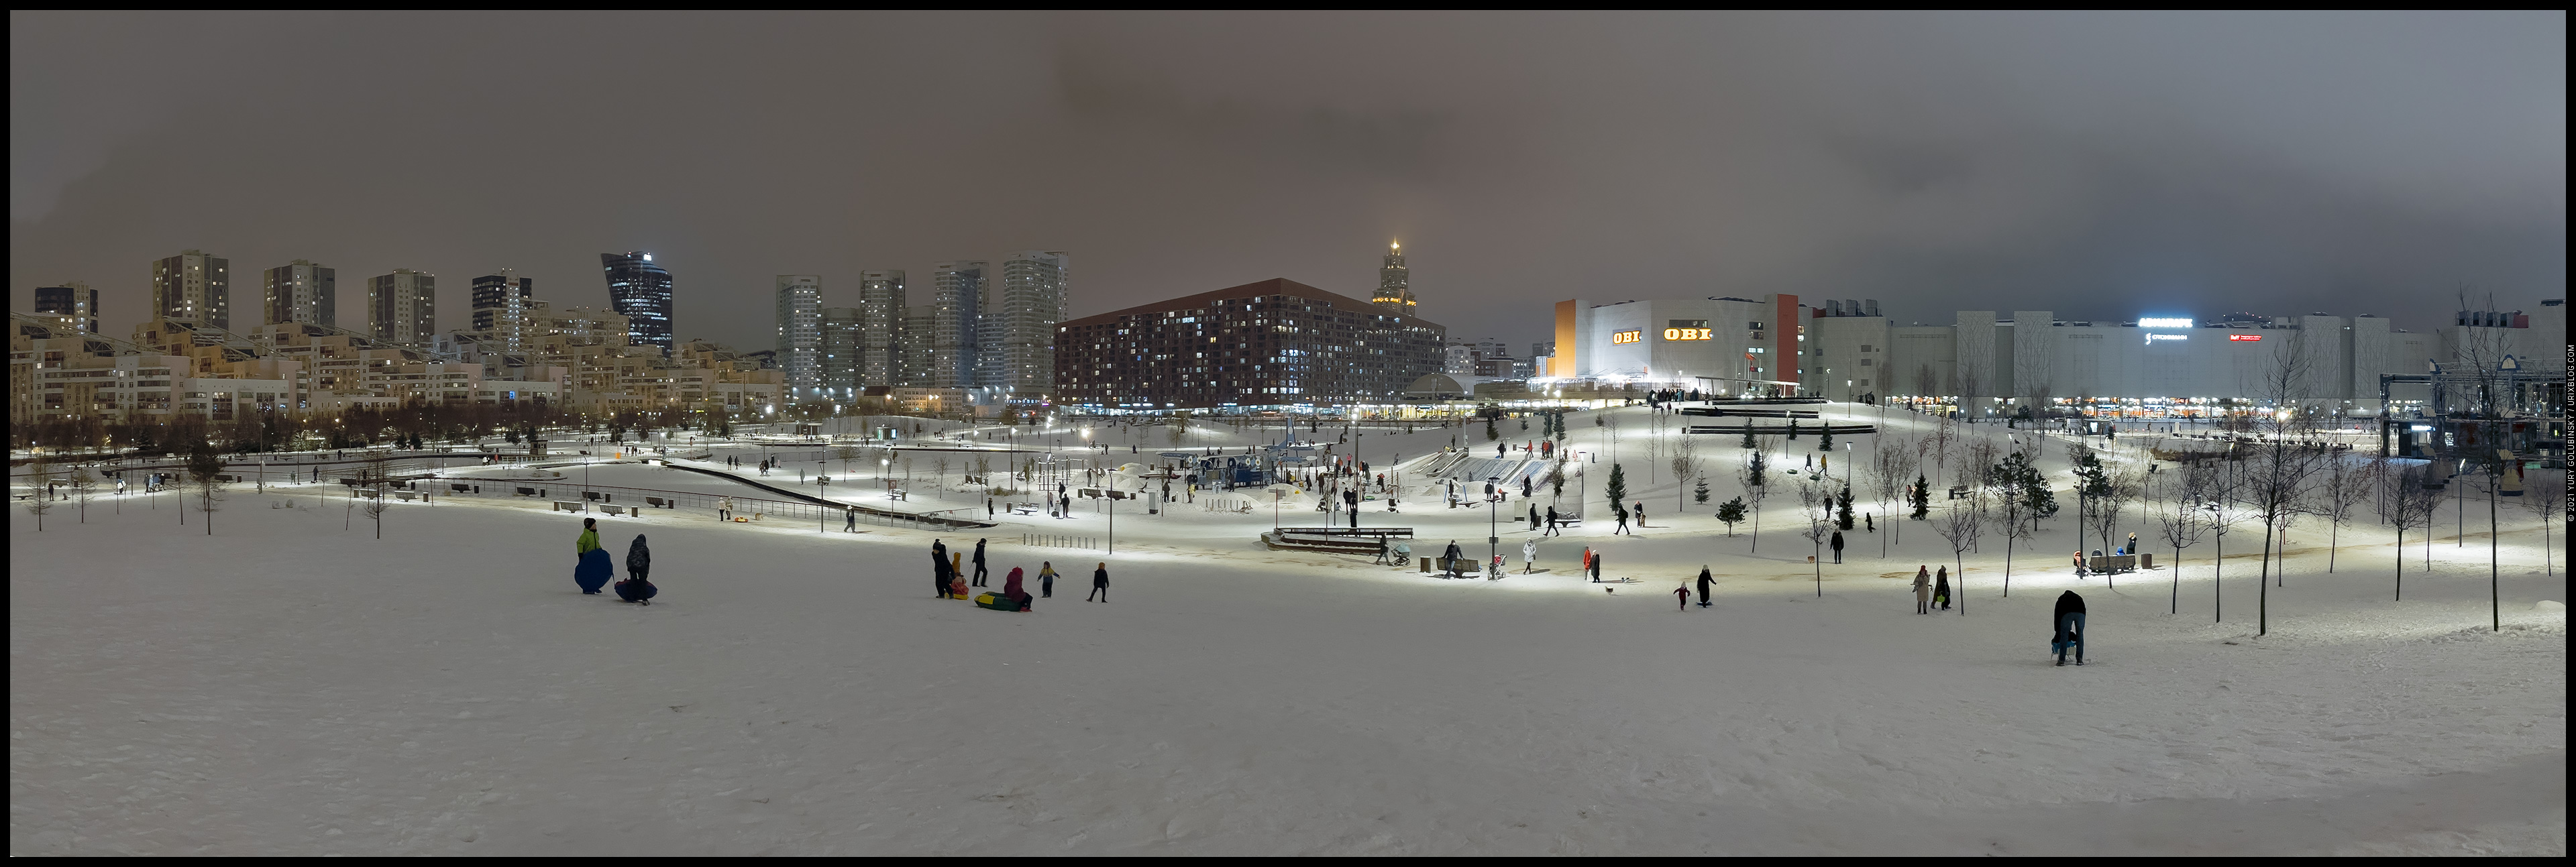 Khodynskoye field, Moscow, Russia, Display P3, snow, panorama, winter, hill, evening, hight